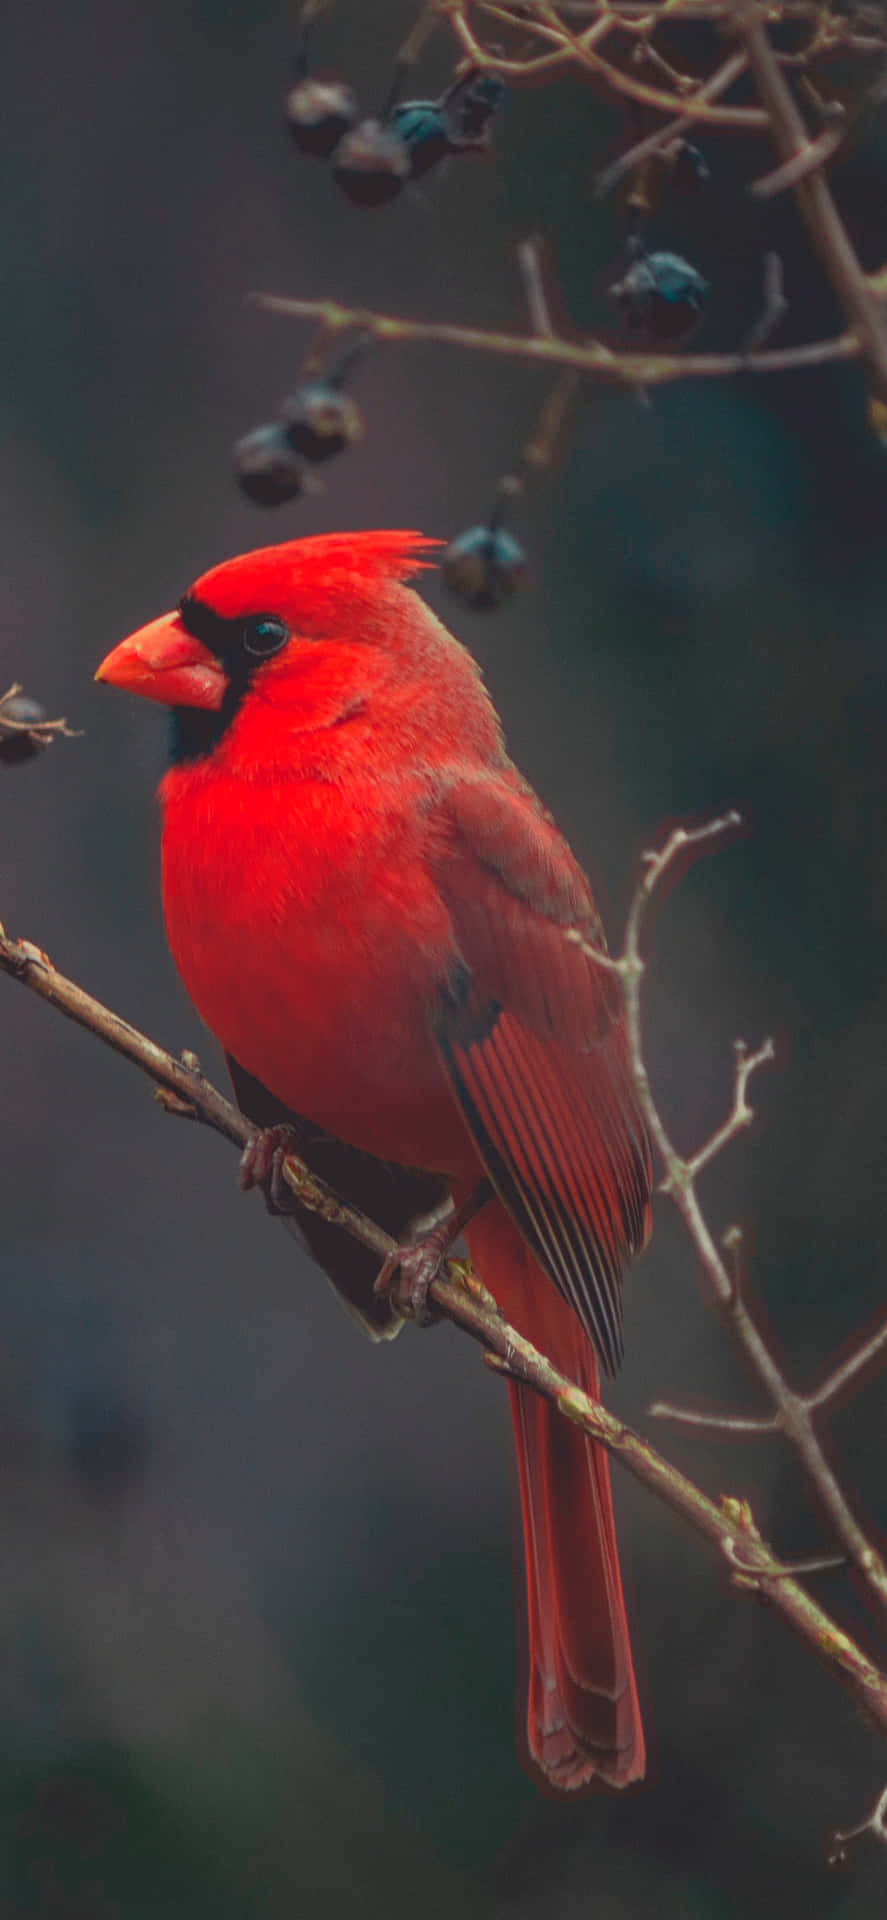 Red Cardinal Bird For Iphone Wallpaper